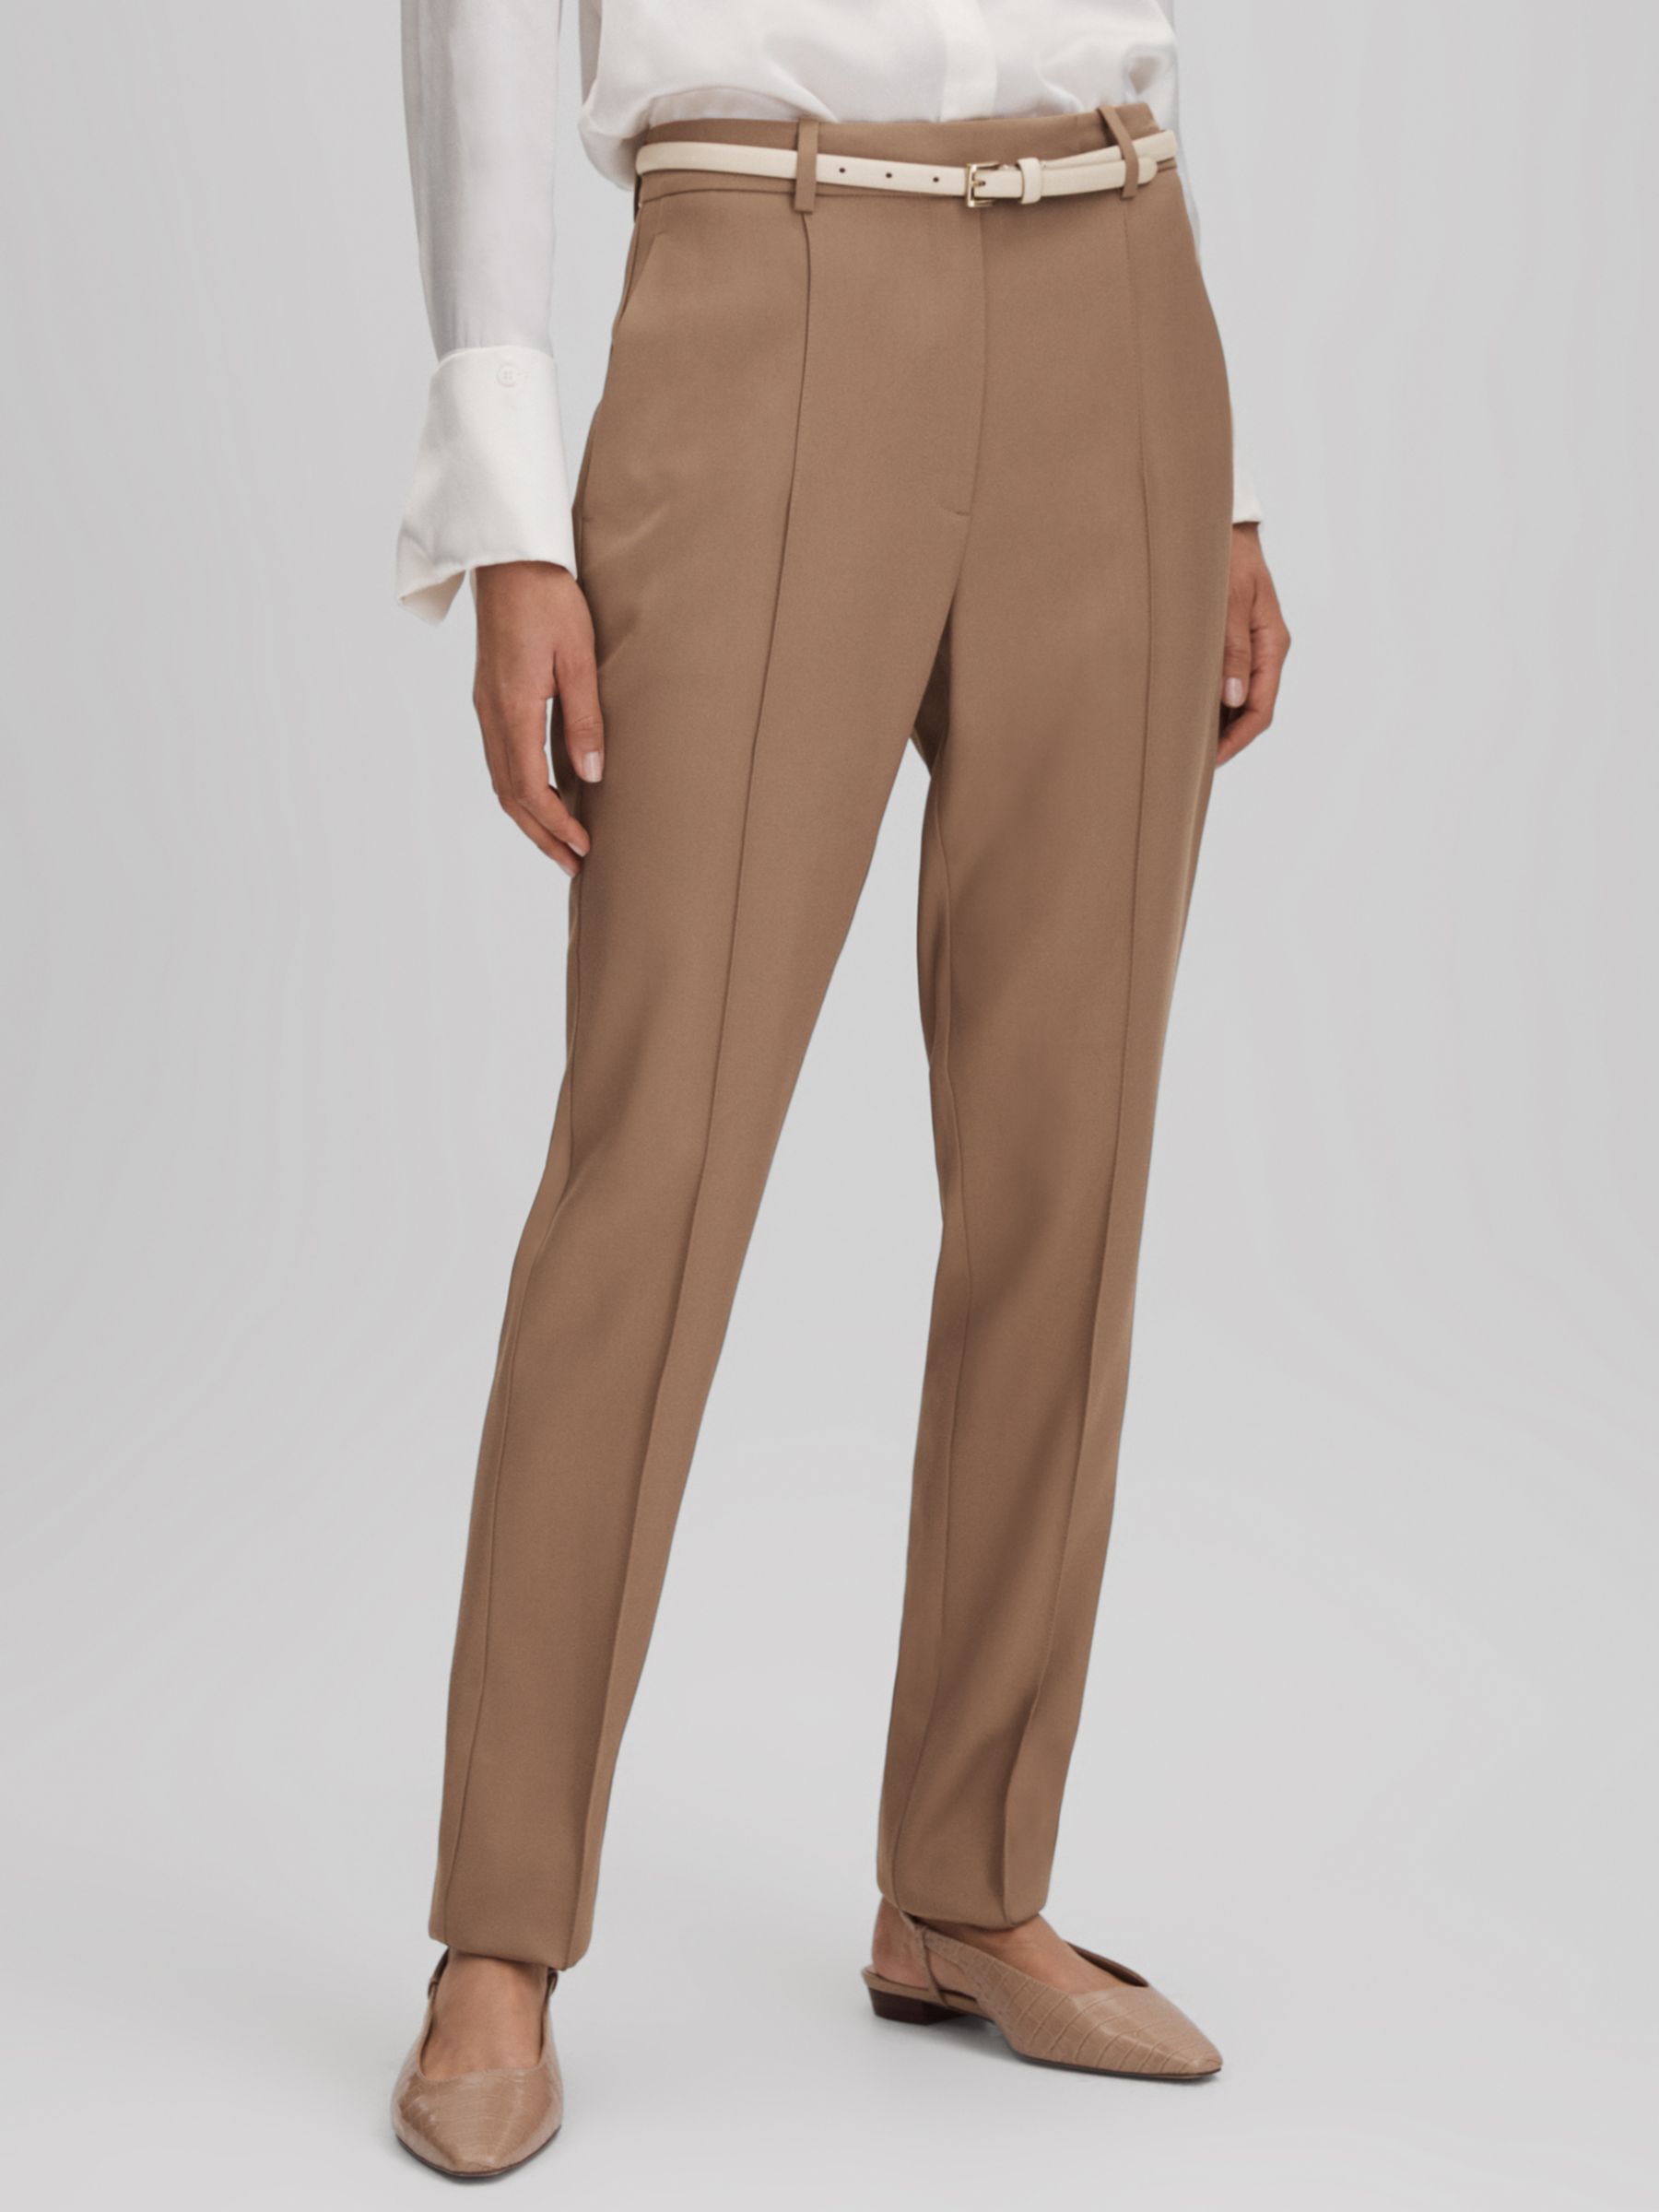 Reiss Wren Slim Fit Suit Trousers, Mink at John Lewis & Partners